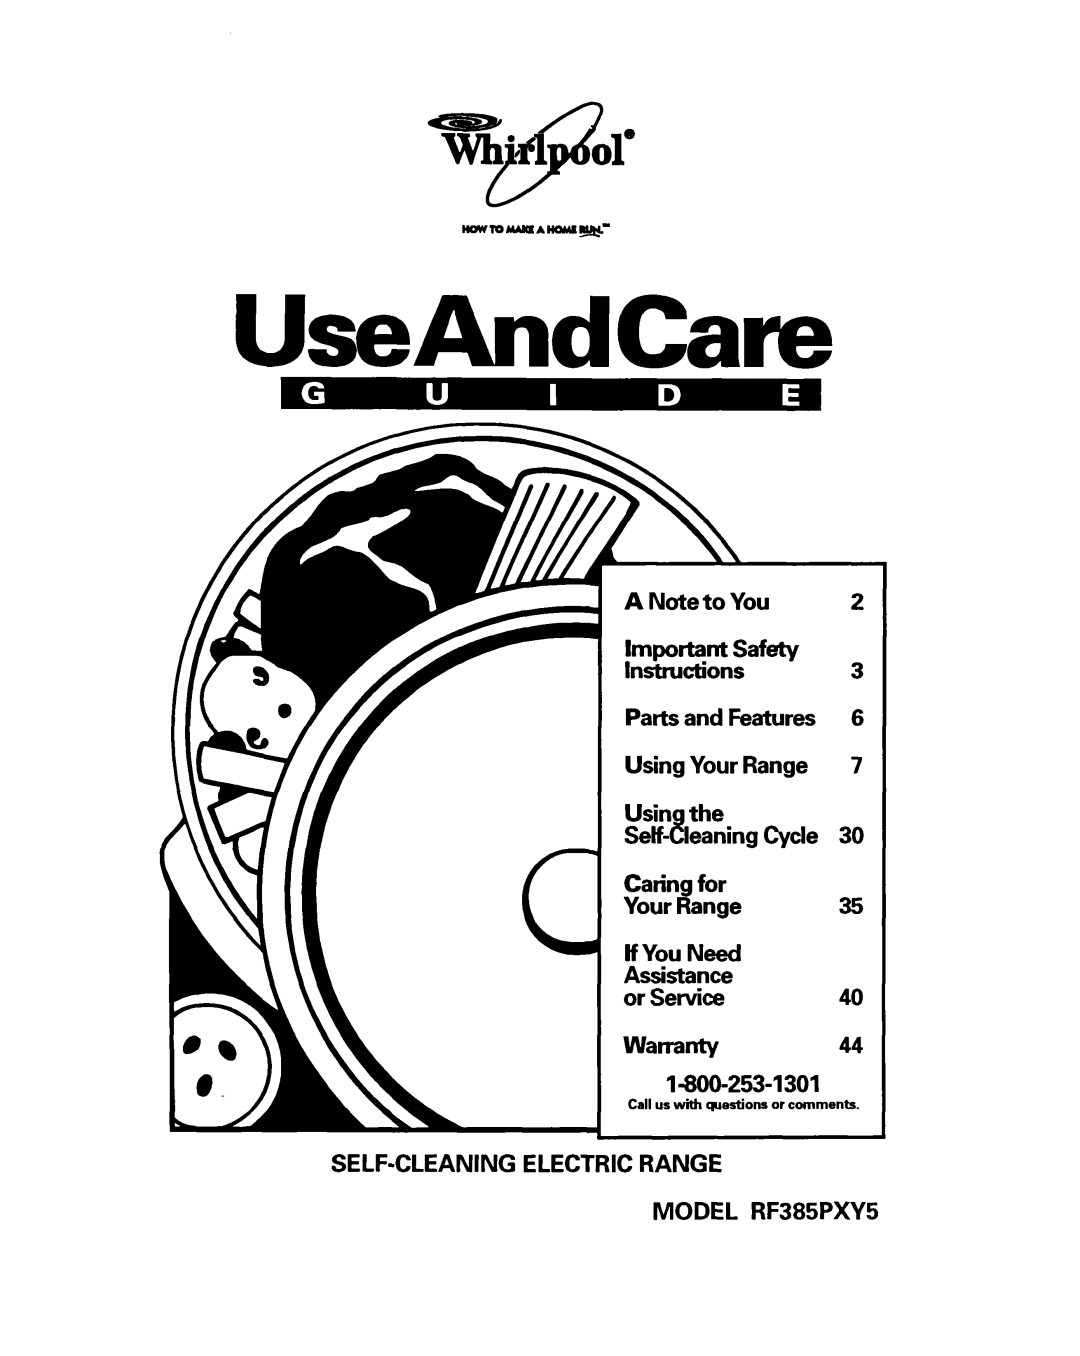 Whirlpool RF385PXY5 warranty UseAndCare, wh. I 01’ H, HowwdAla*l#llu~ 